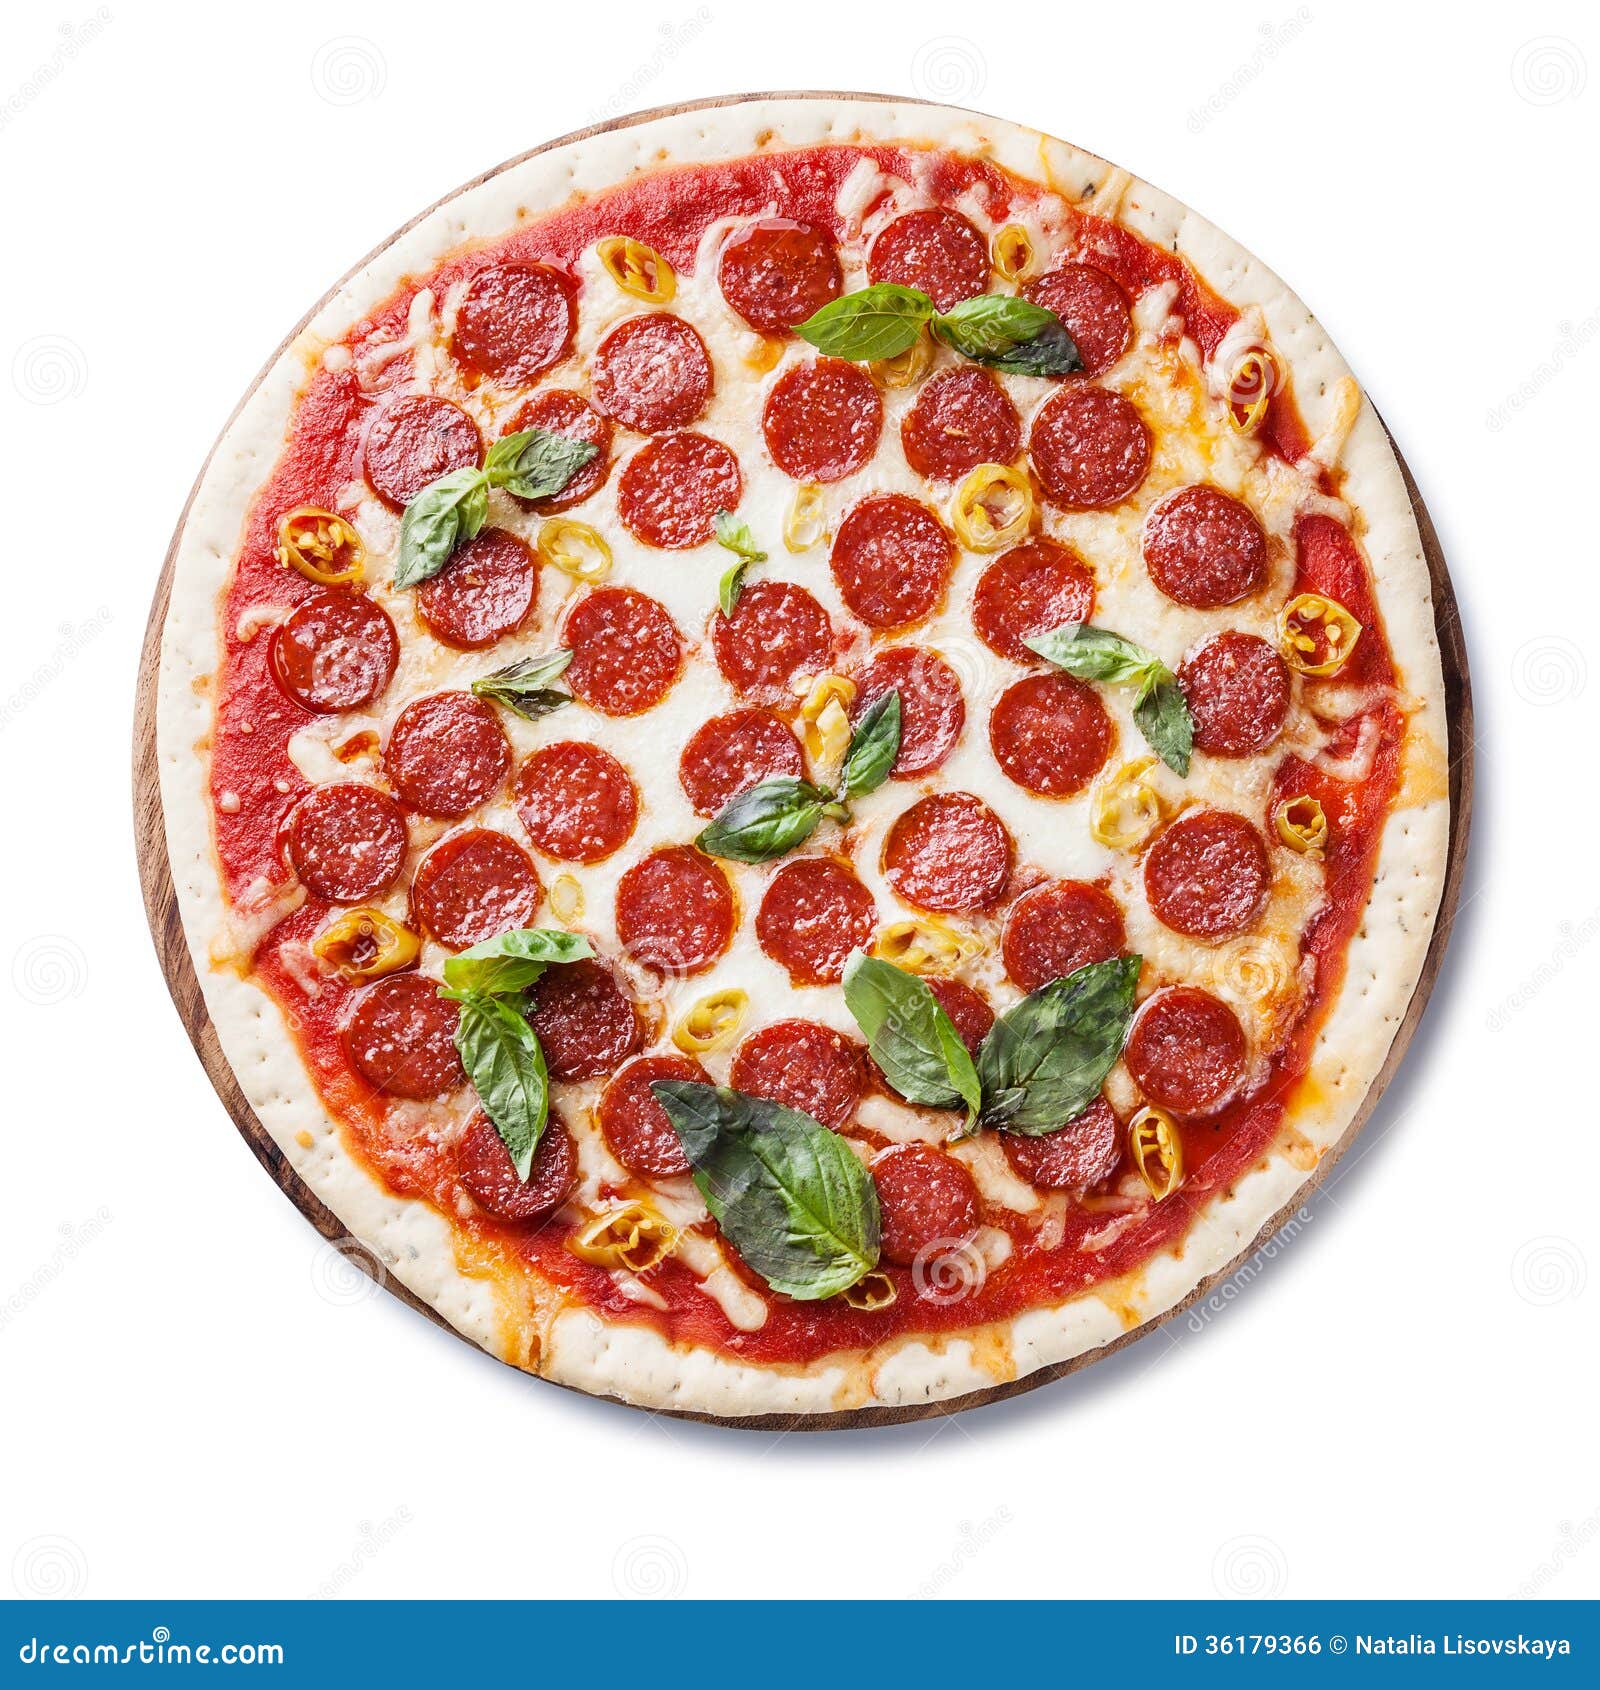 фото пиццы пепперони на белом фоне фото 21